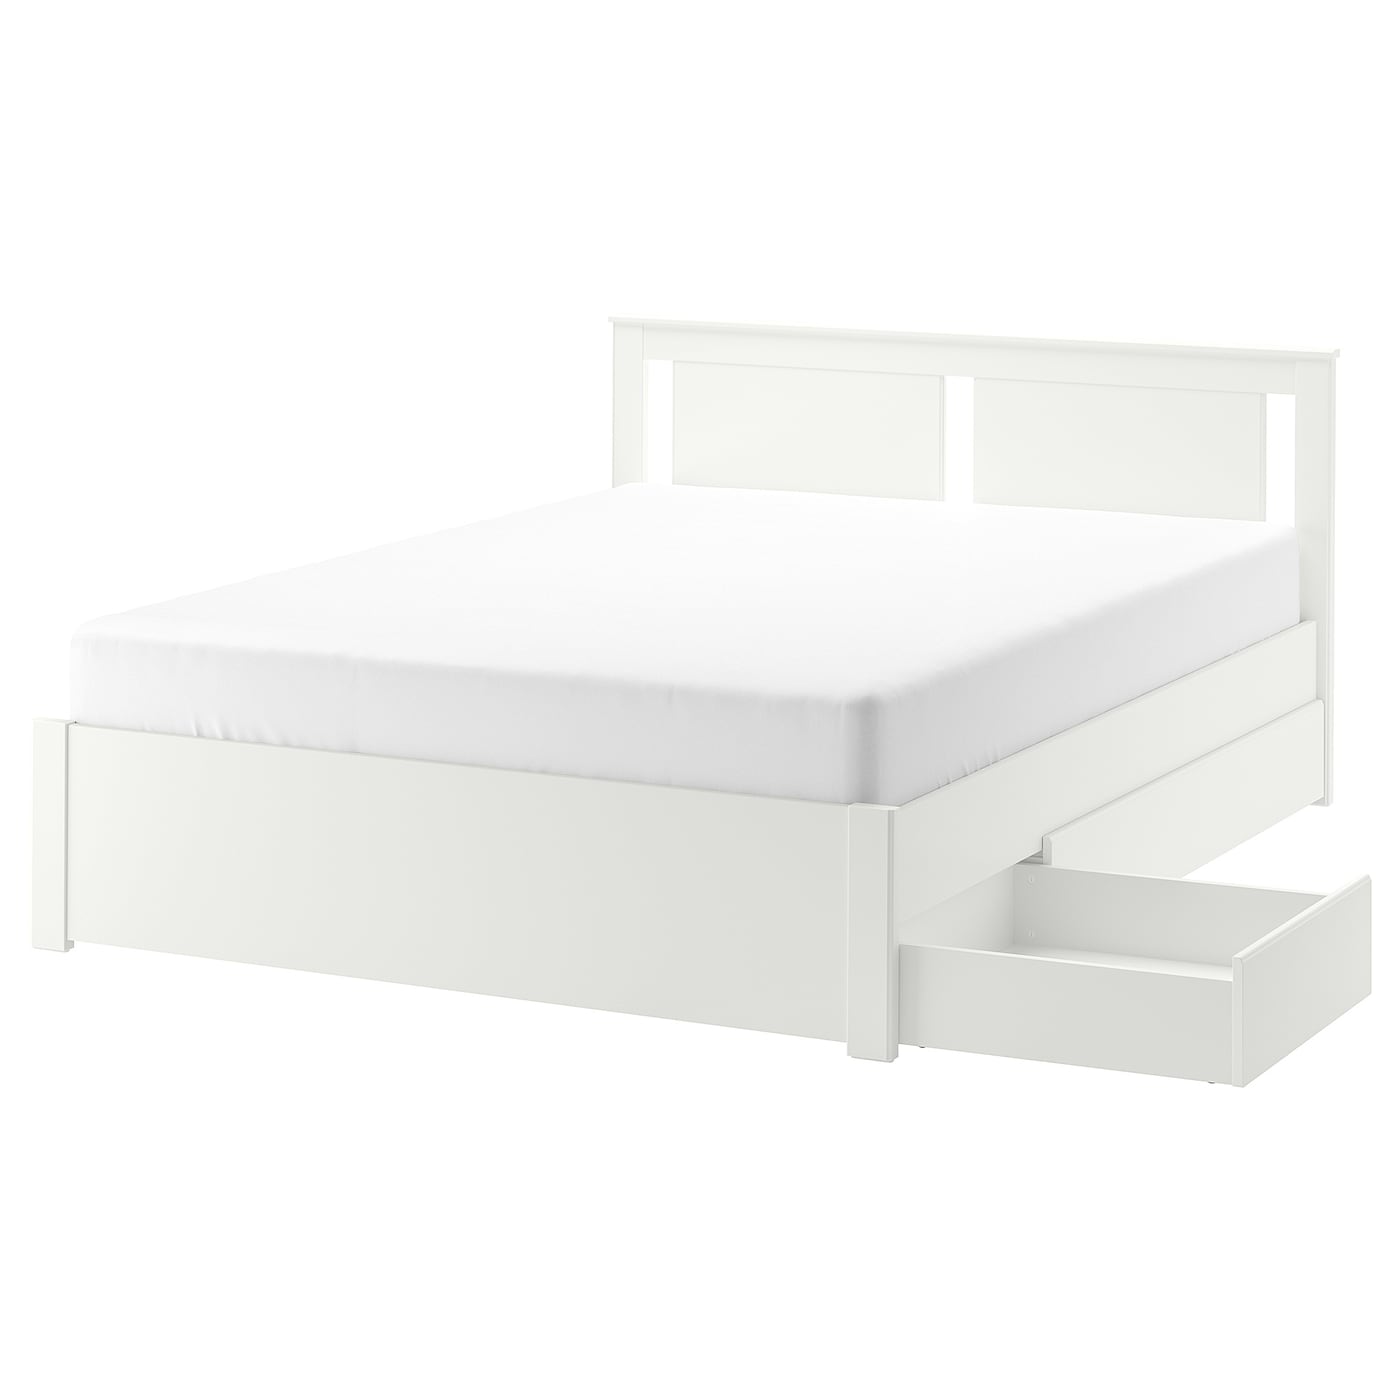 Каркас кровати с 4 ящиками для хранения - IKEA SONGESAND, 200х160 см, белый, СОНГЕСАНД ИКЕА